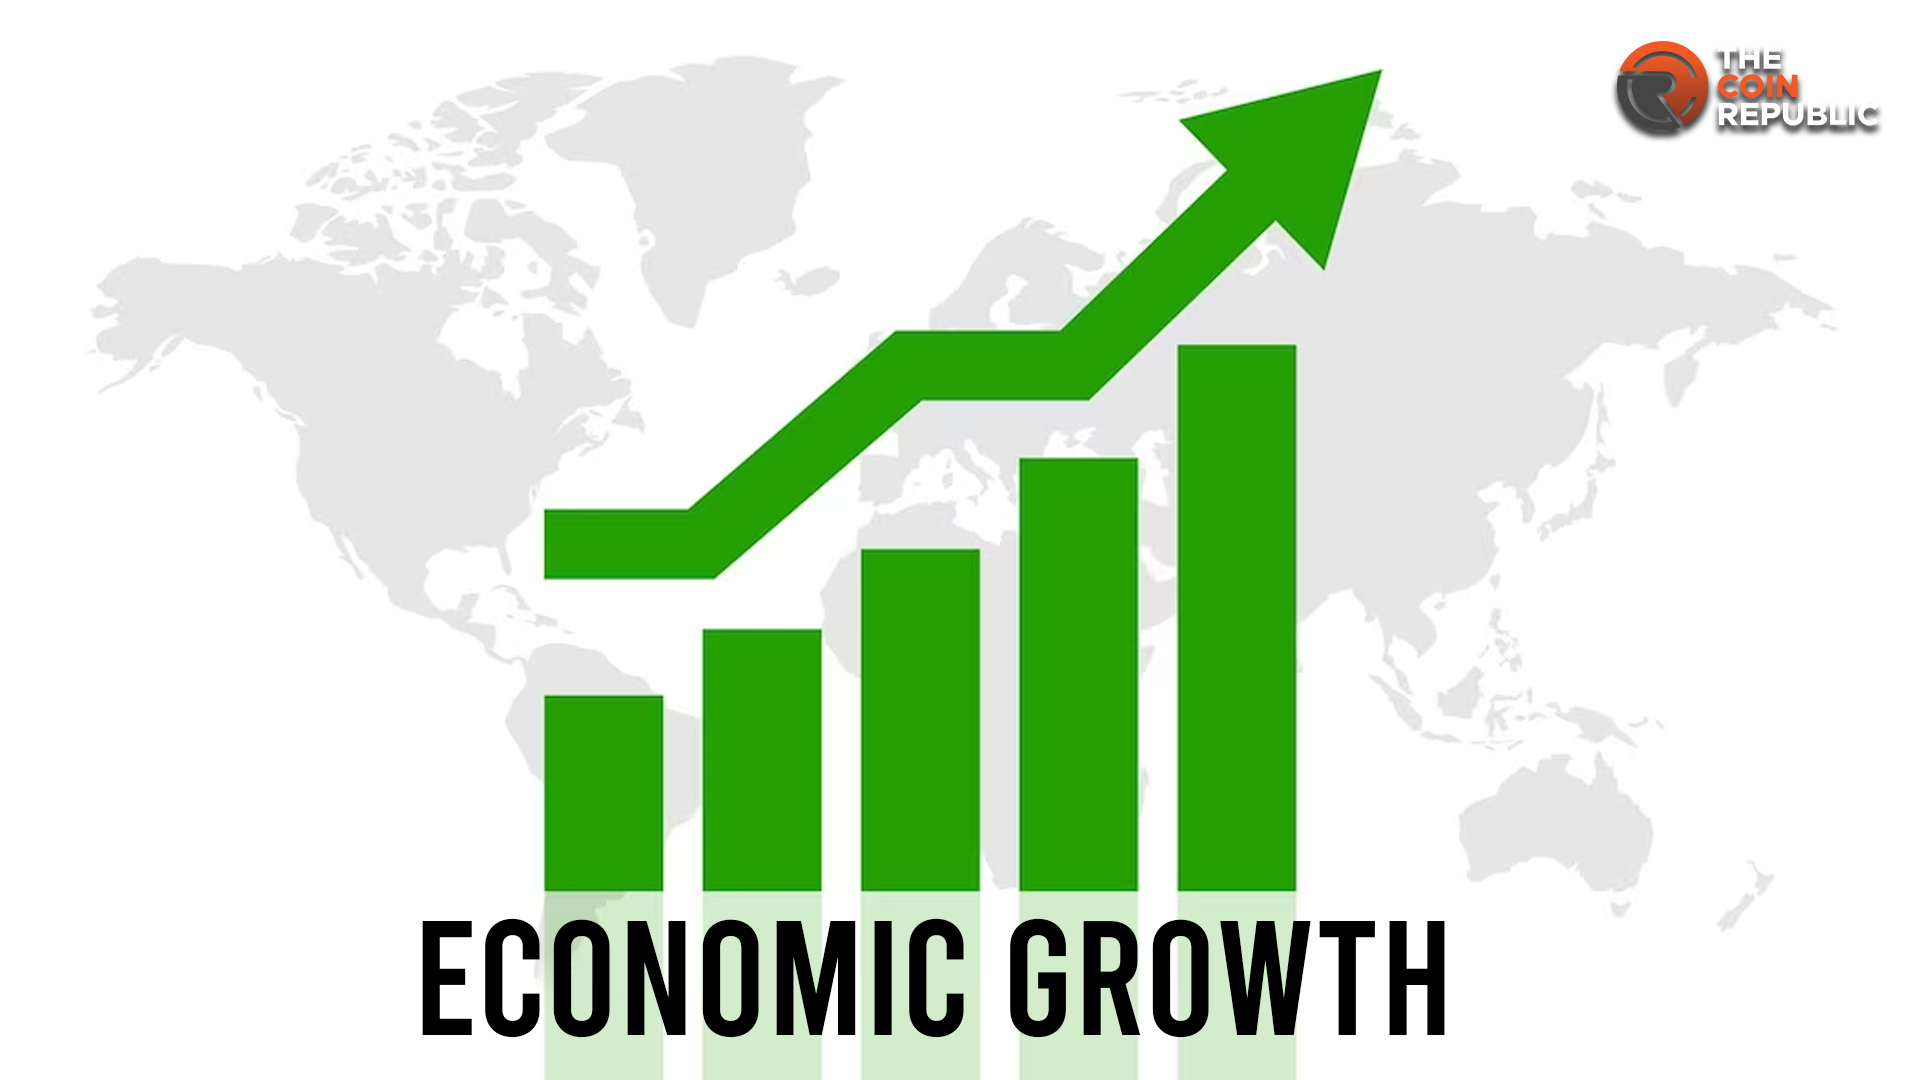 Examining Factors That Drive Economic Growth